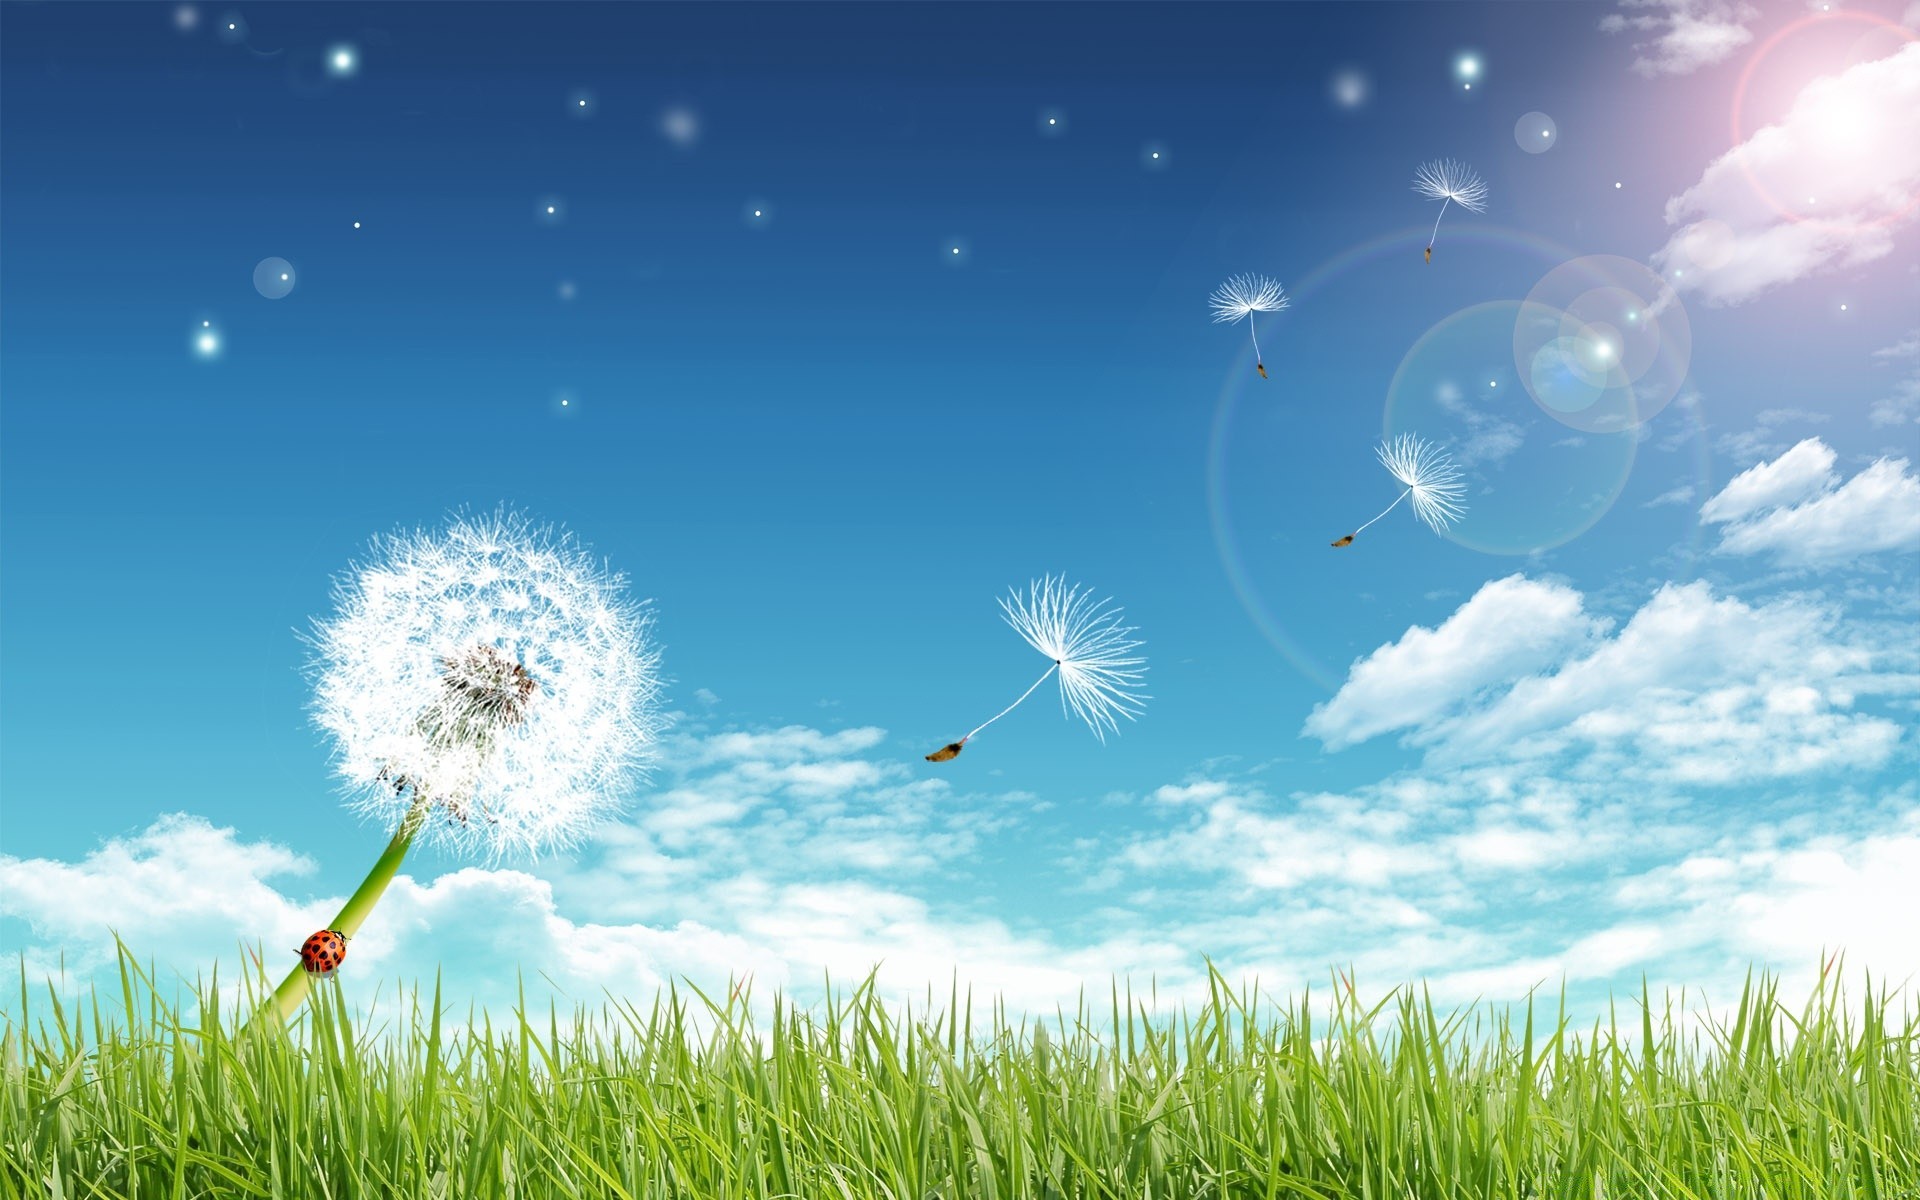 креатив трава сенокос поле газон солнце природа лето небо хорошую погоду сезон яркий пространство